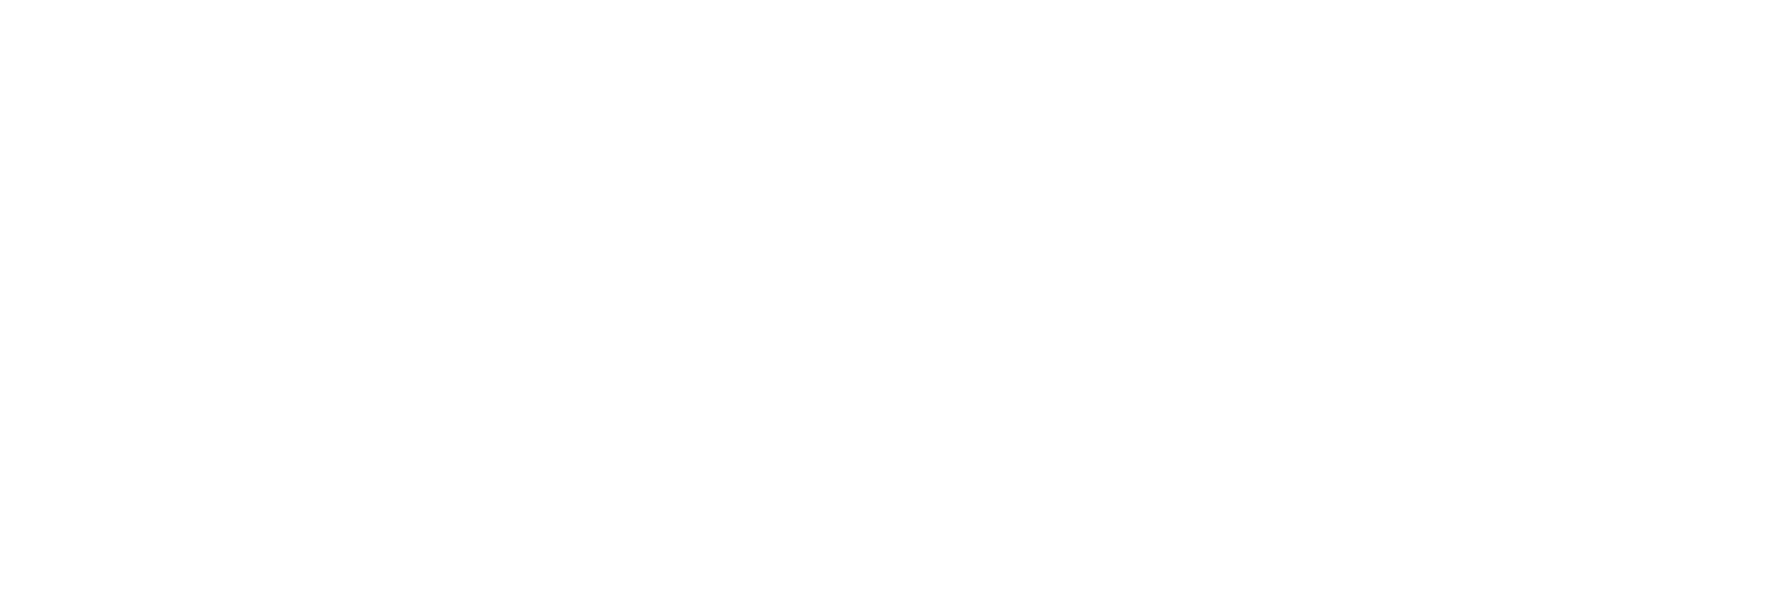 Gordon College Celebrates the Inauguration of Michael D. Hammond as the Ninth President